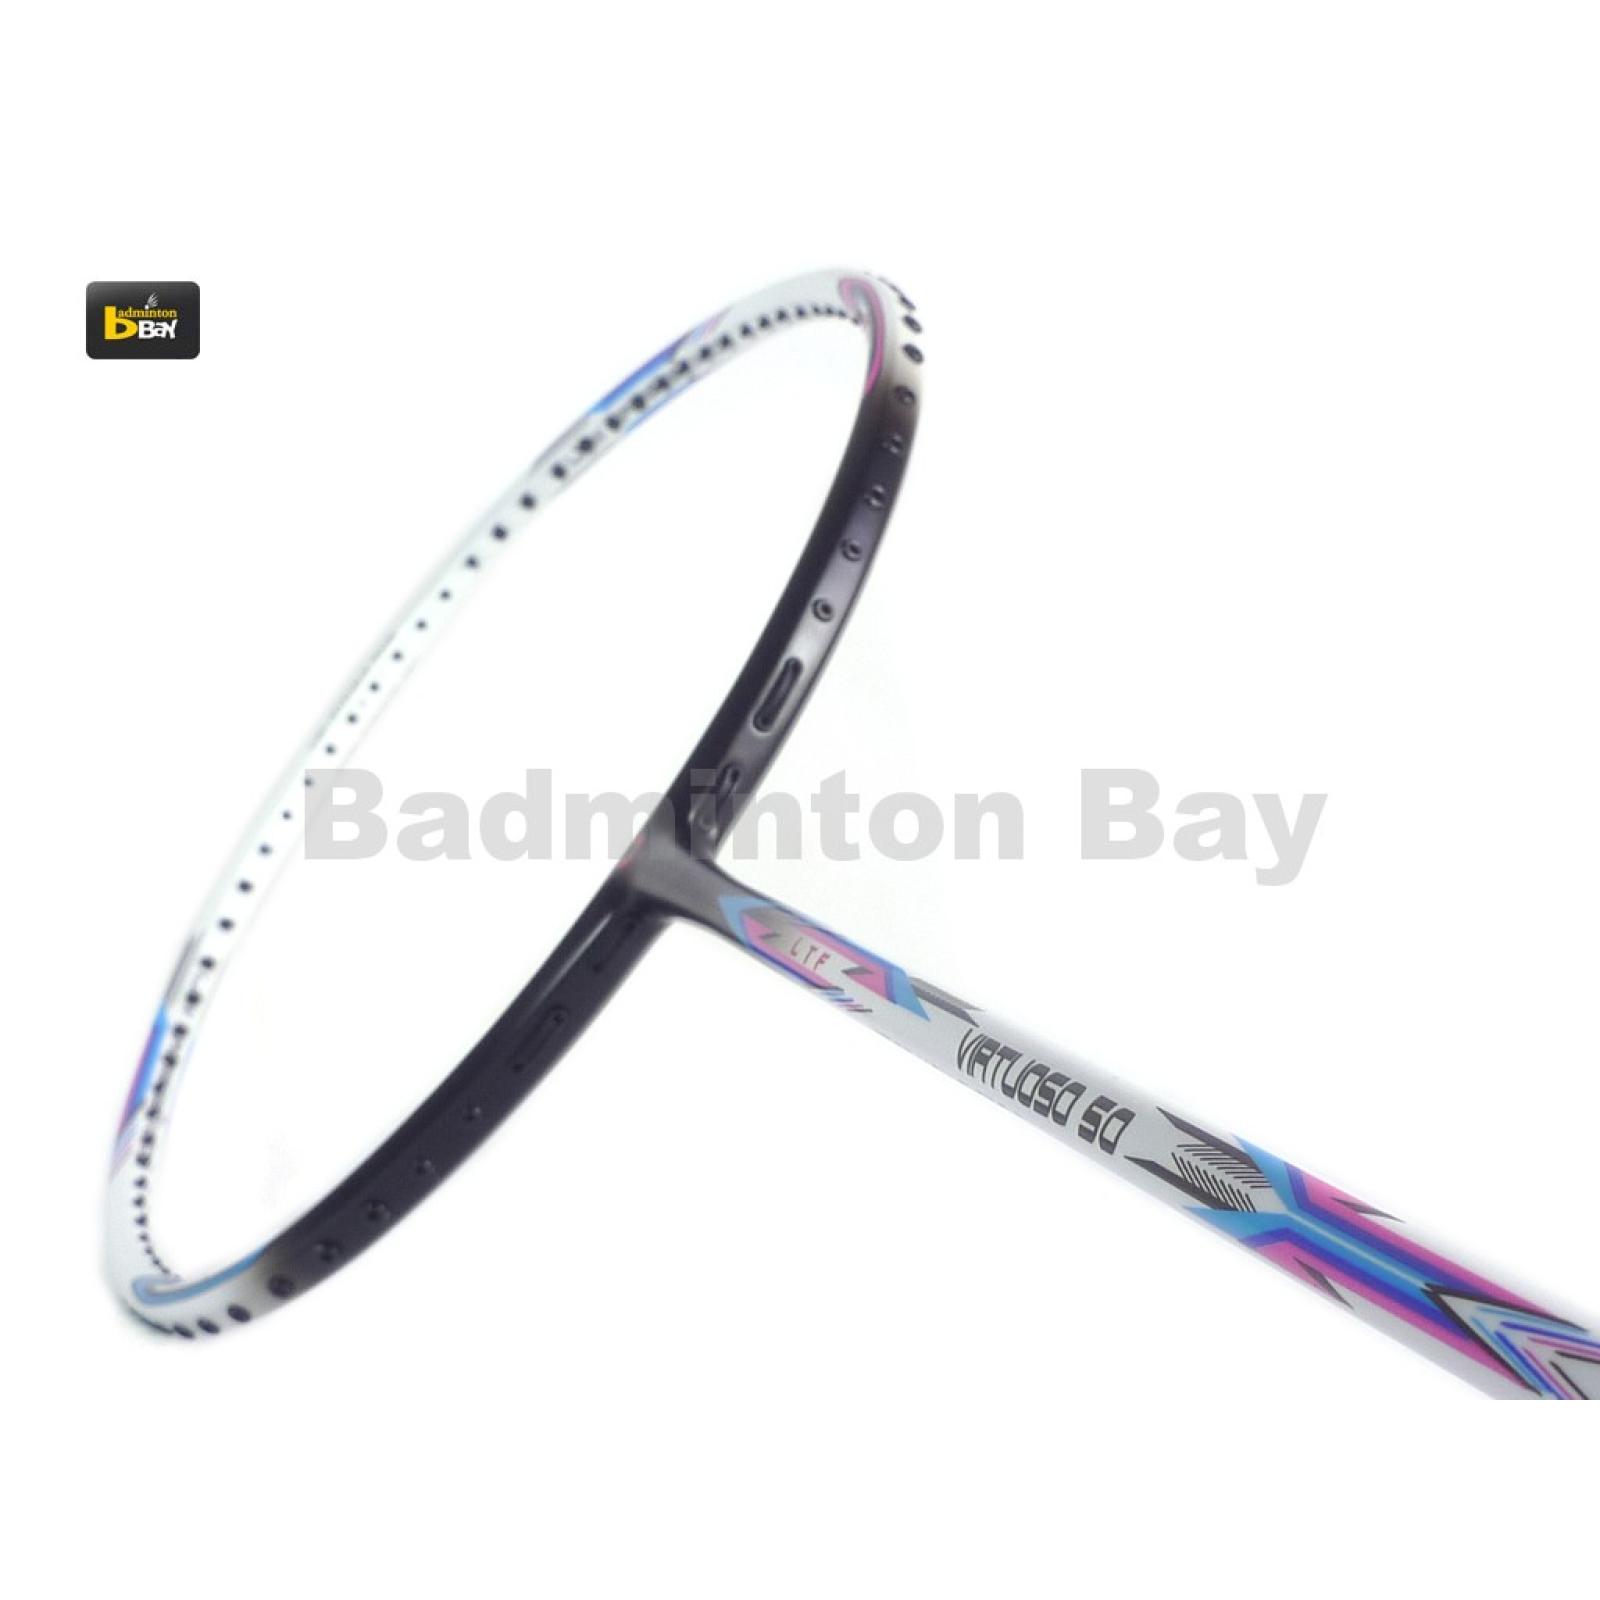 Japan Made APACS Commander 80 Badminton Racquet Racket FREE String & Grip